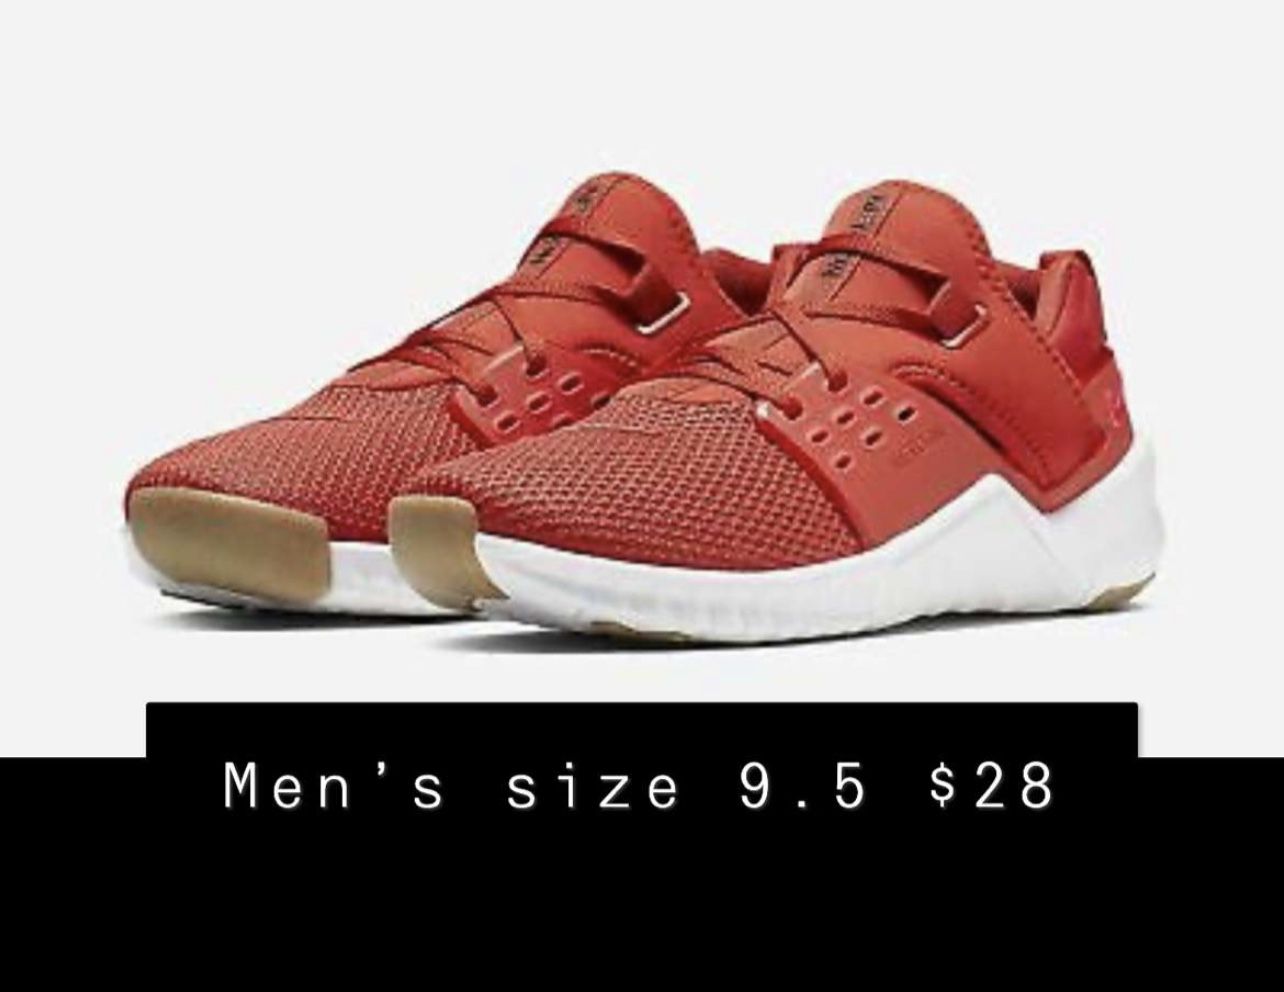 Nike Metcon Men’s Size 9.5 $28 Brand New